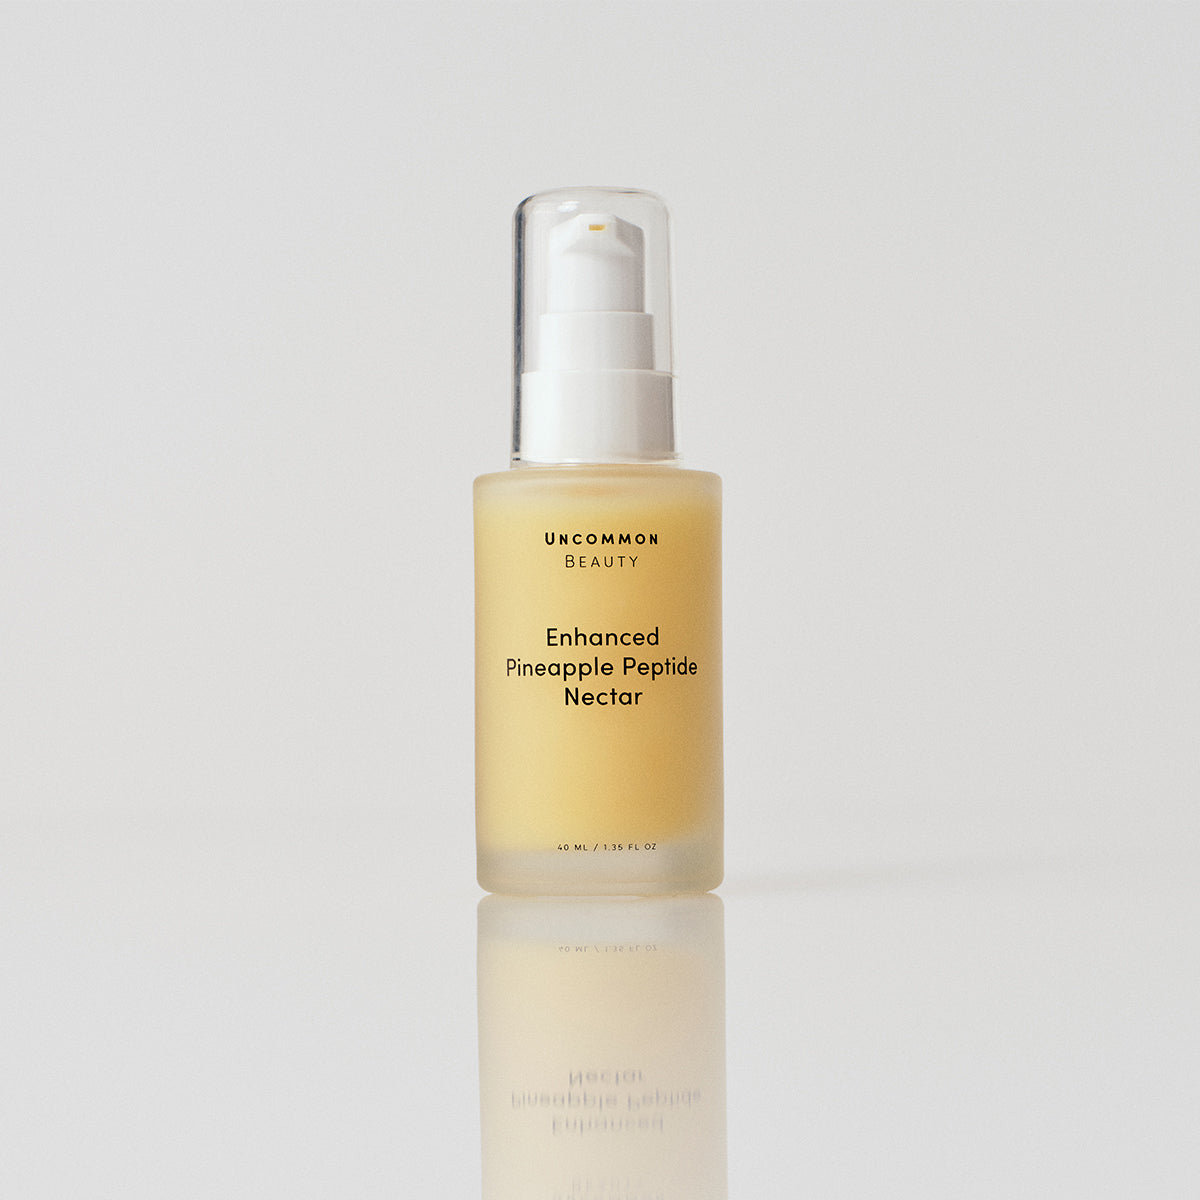 Perfume COCO 40ml - THE FRUIT COMPANY –